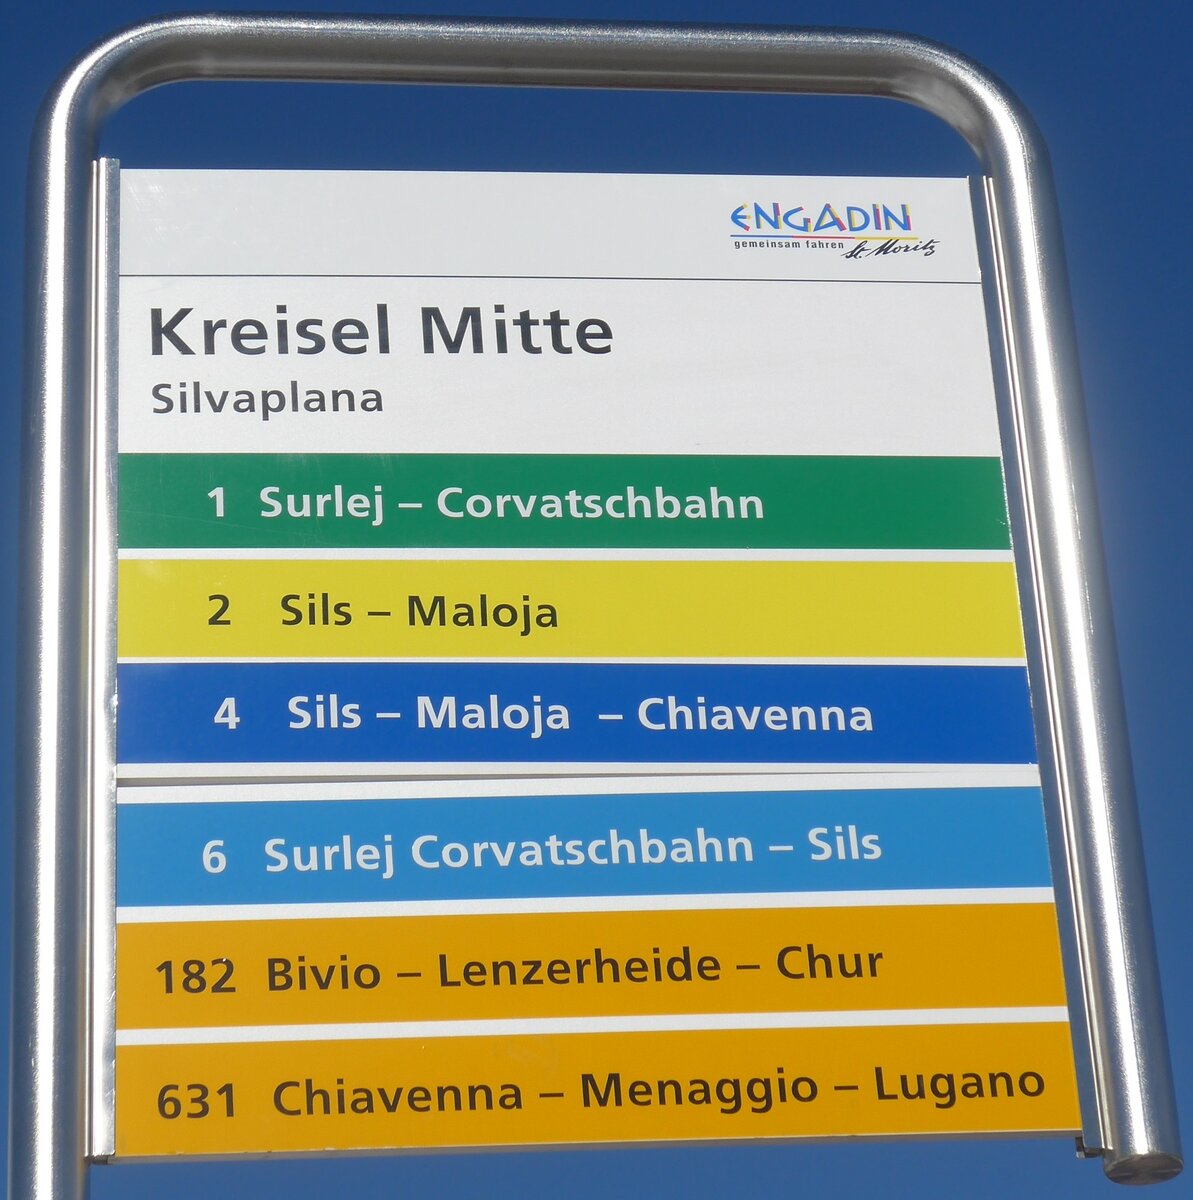 (188'532) - ENGADIN/PostAuto-Haltestellenschild - Silvaplana, Kreisel Mitte - am 13. Februar 2018